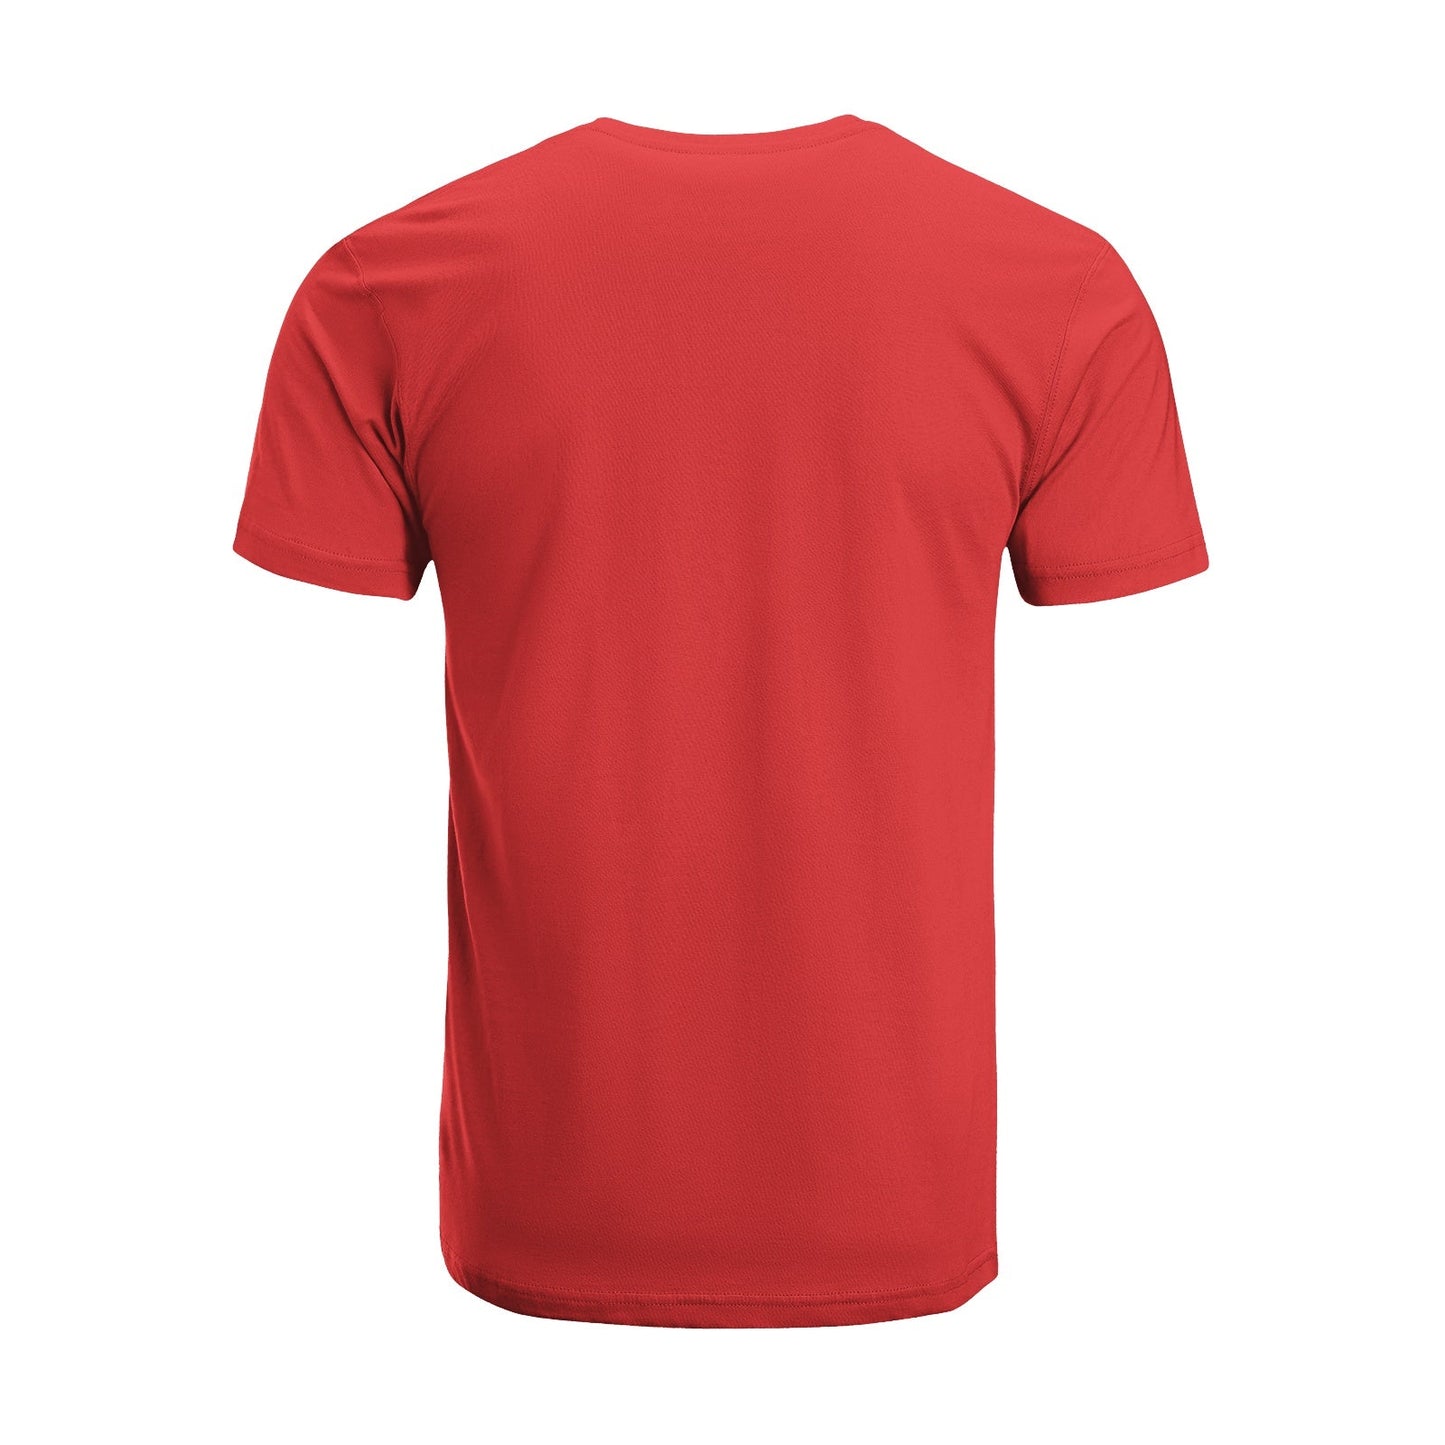 Unisex Short Sleeve Crew Neck Cotton Jersey T-Shirt CAT 39 - Tara-Outfits.com